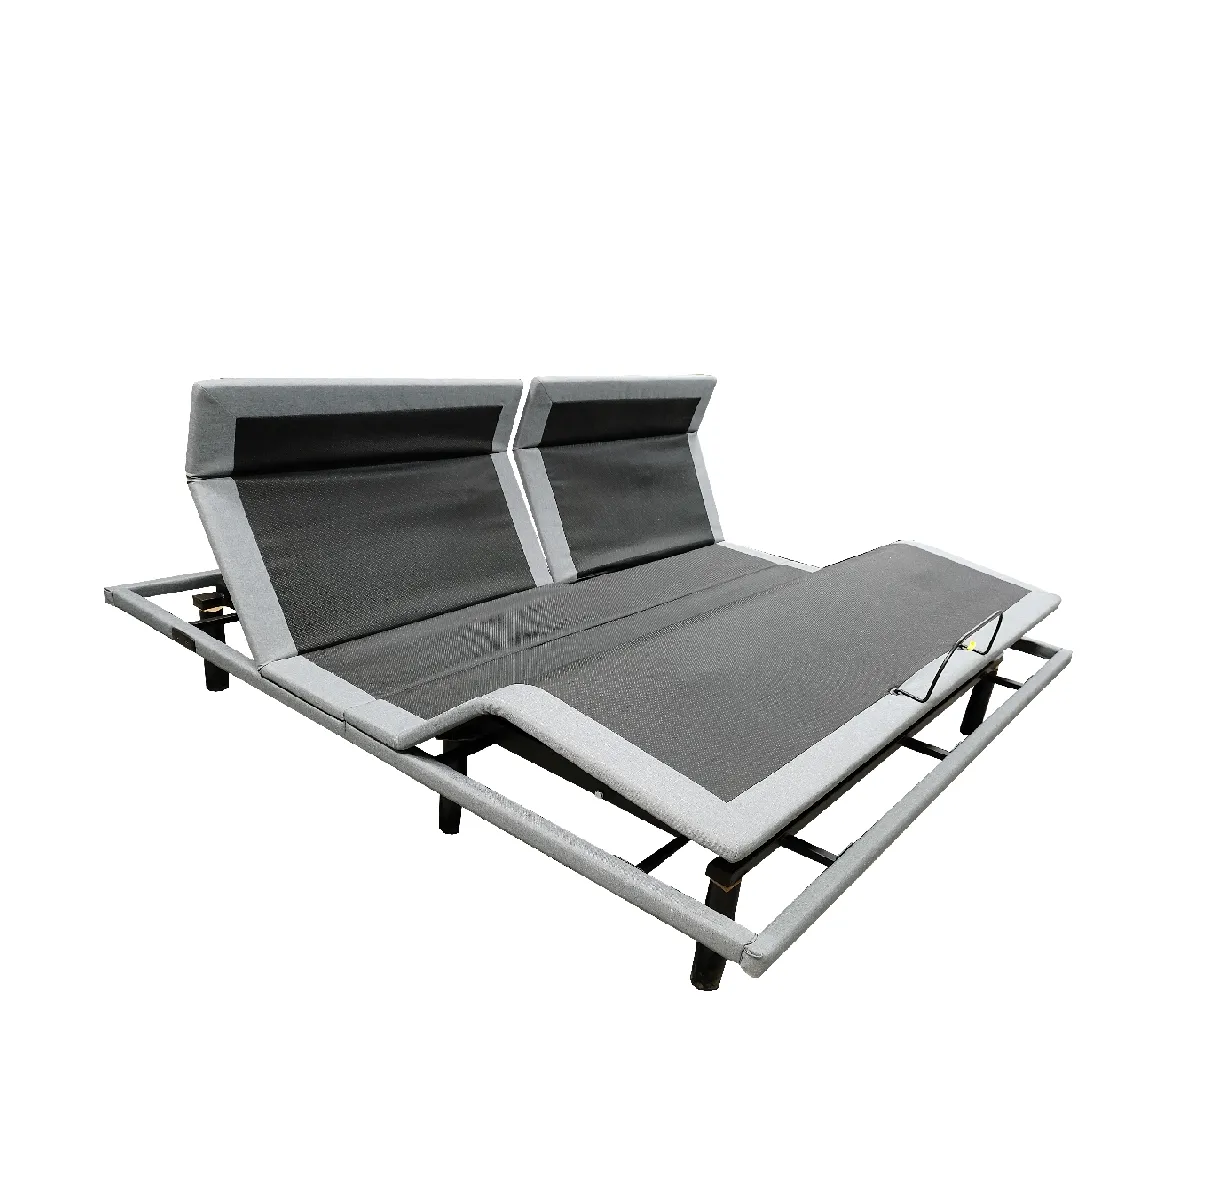 Split head adjustable Bed Base Frame with wall hugging with multiple motors(Head Tilt)Massage, Head & Foot Articulation